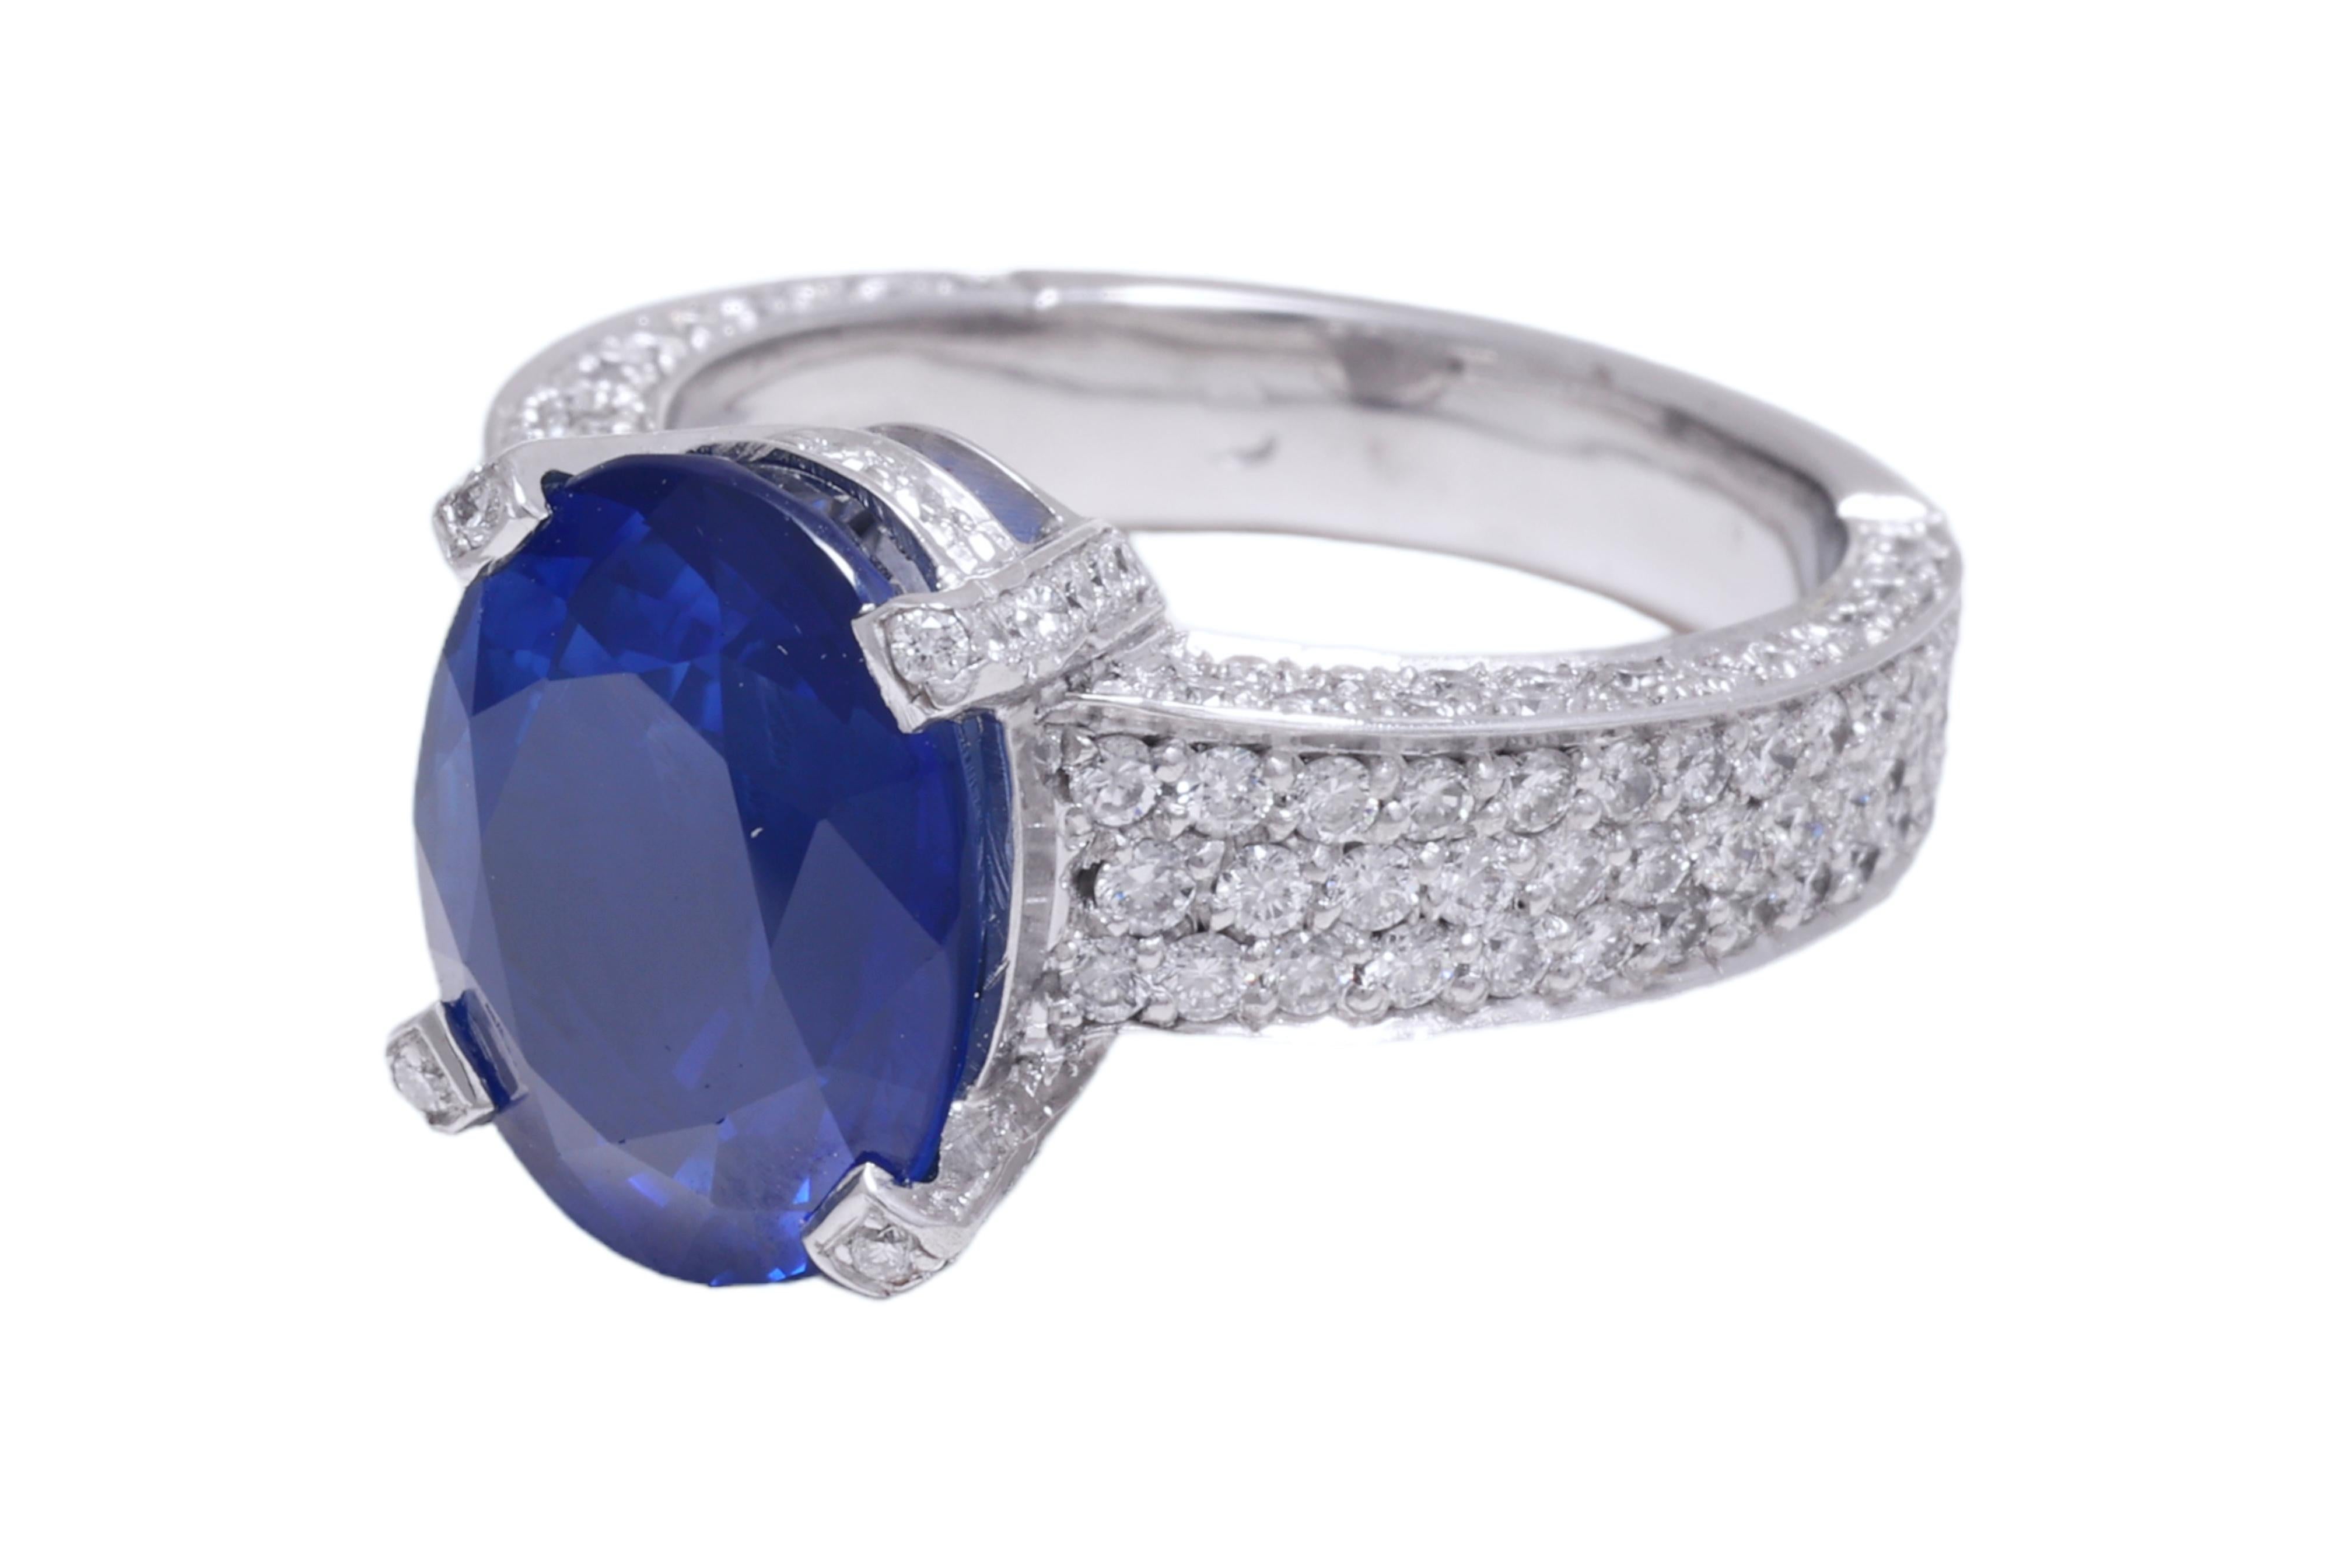 Beautiful 18 kt. White Gold Ring with 6.32 ct. Ceylon Sapphire & 1.62 ct. Diamonds

Sapphire: Amazing Blue Color, Natural corundum blue, oval mixed cut Ceylon Sapphire 6.32 ct. comes with AGL Certificate

Diamonds: brilliant cut diamonds together